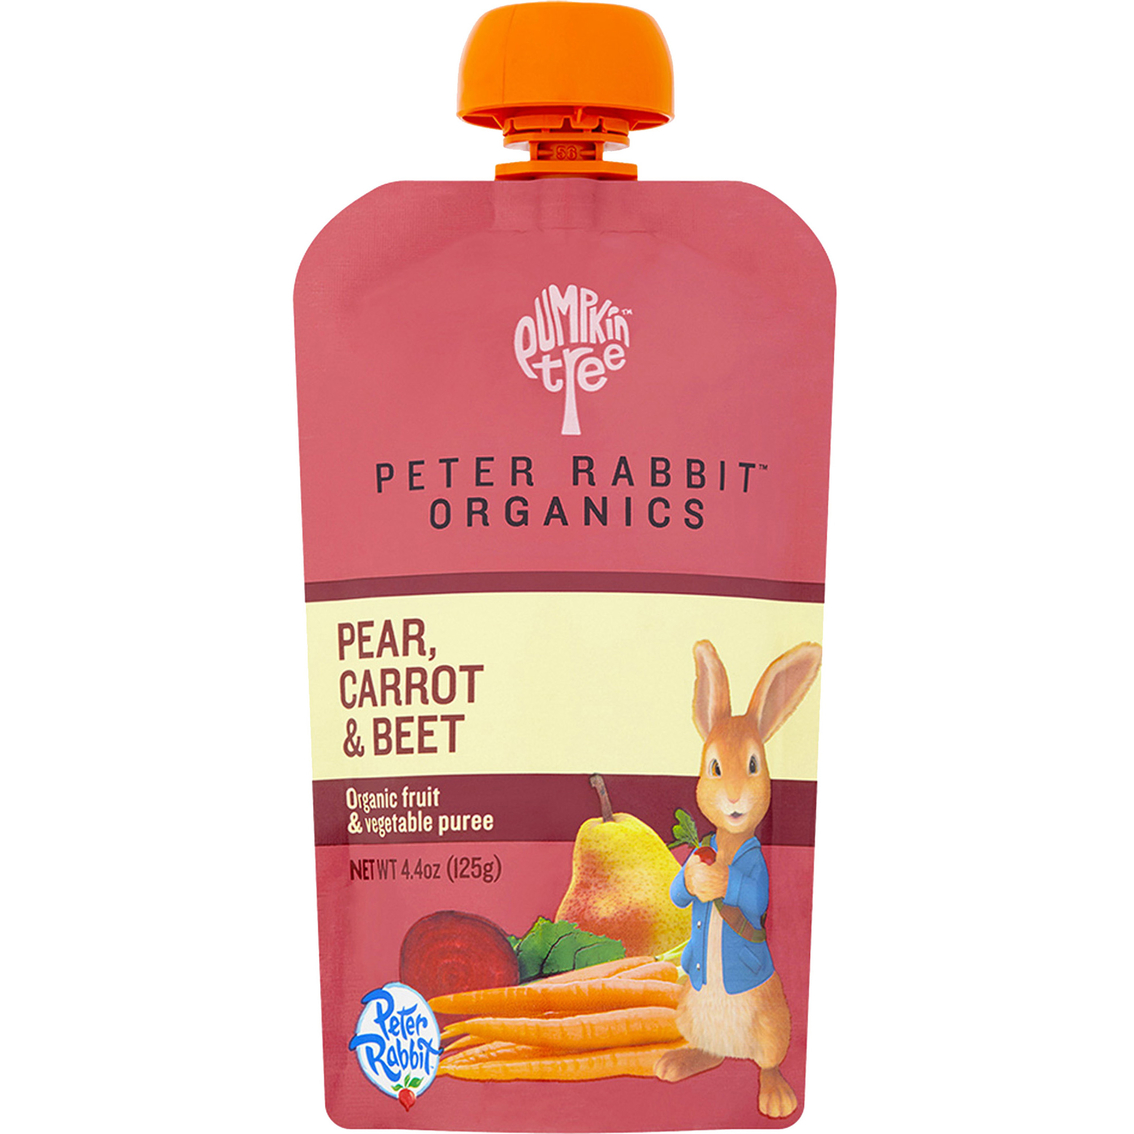 Peter Rabbit Organics Pear, Carrot & Beet Fruit Snack Squeeze Pouch 4.4 oz.